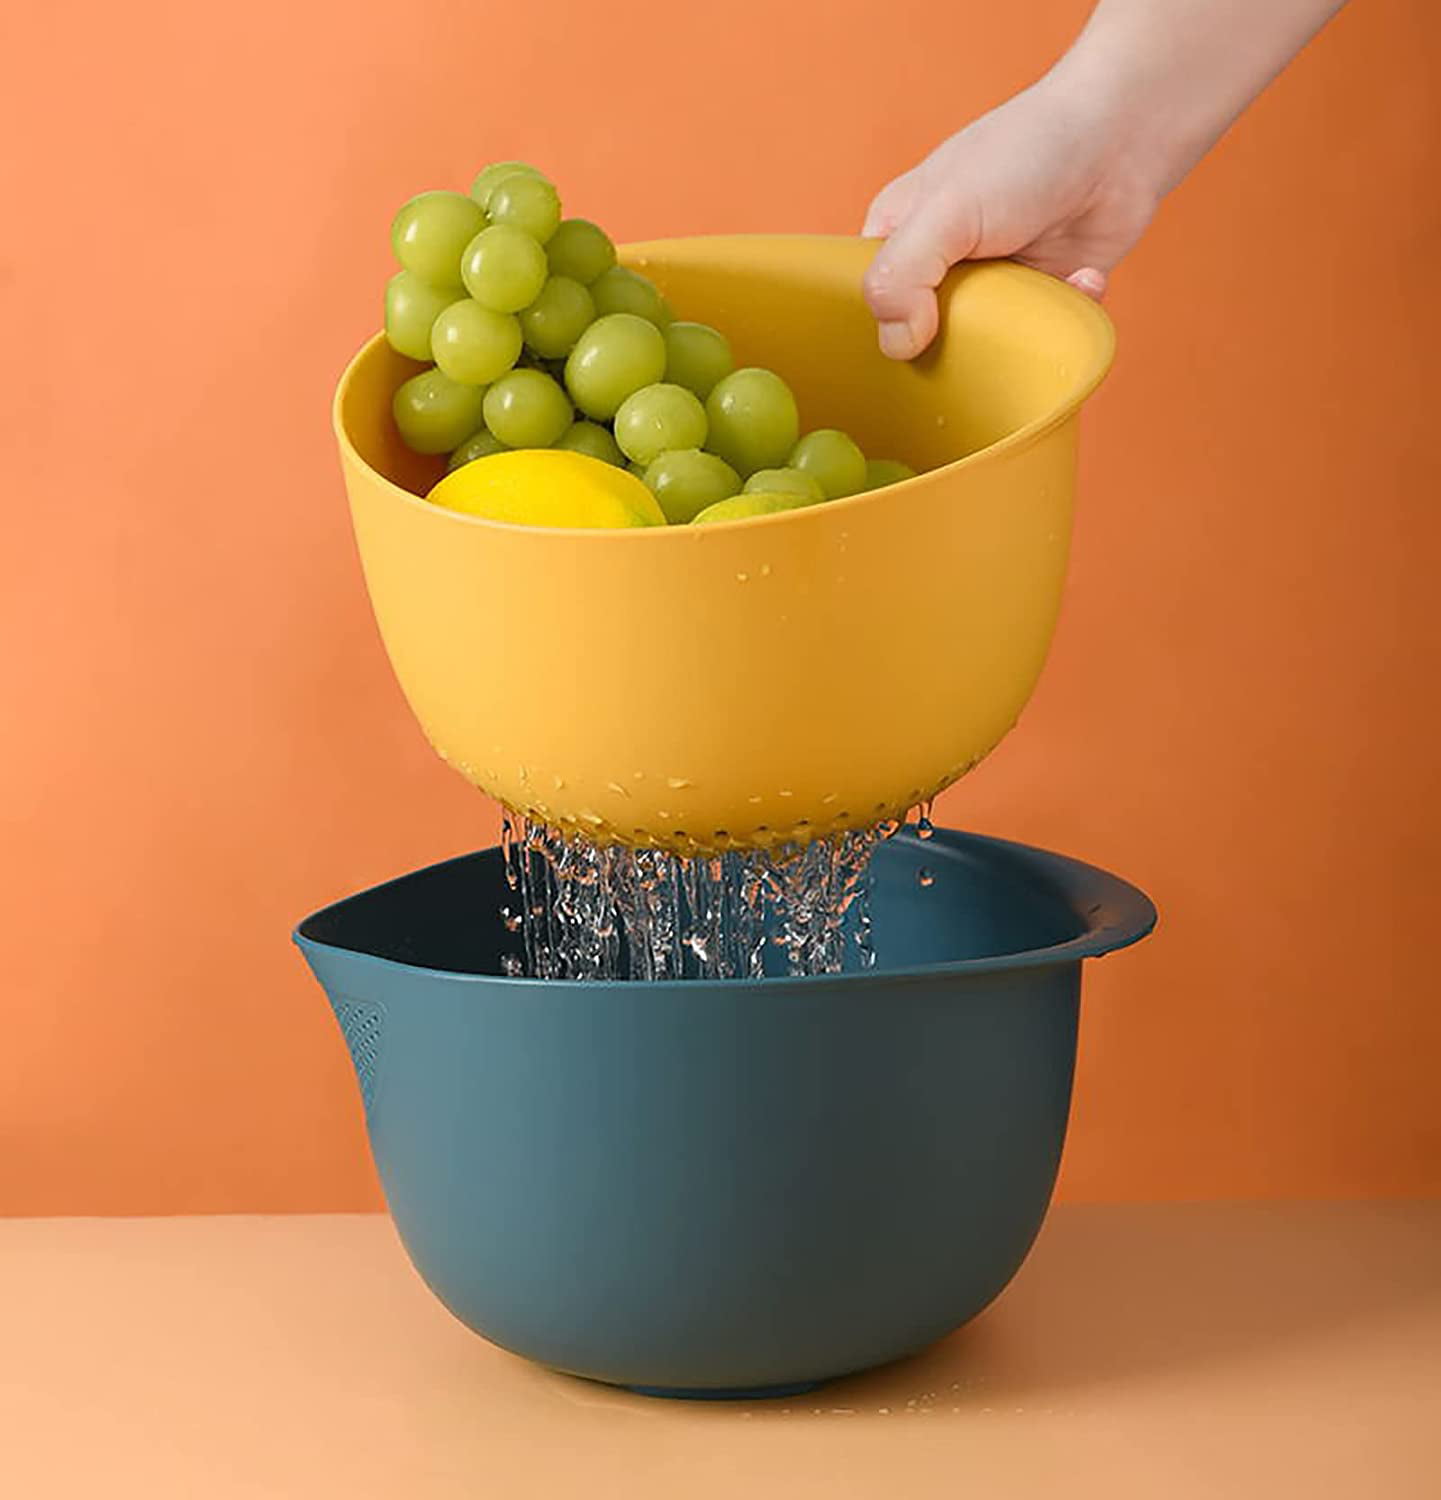 New Mini Veggie Fruits Washing Bowl Colander Strainer Salad Mixing Bowl White